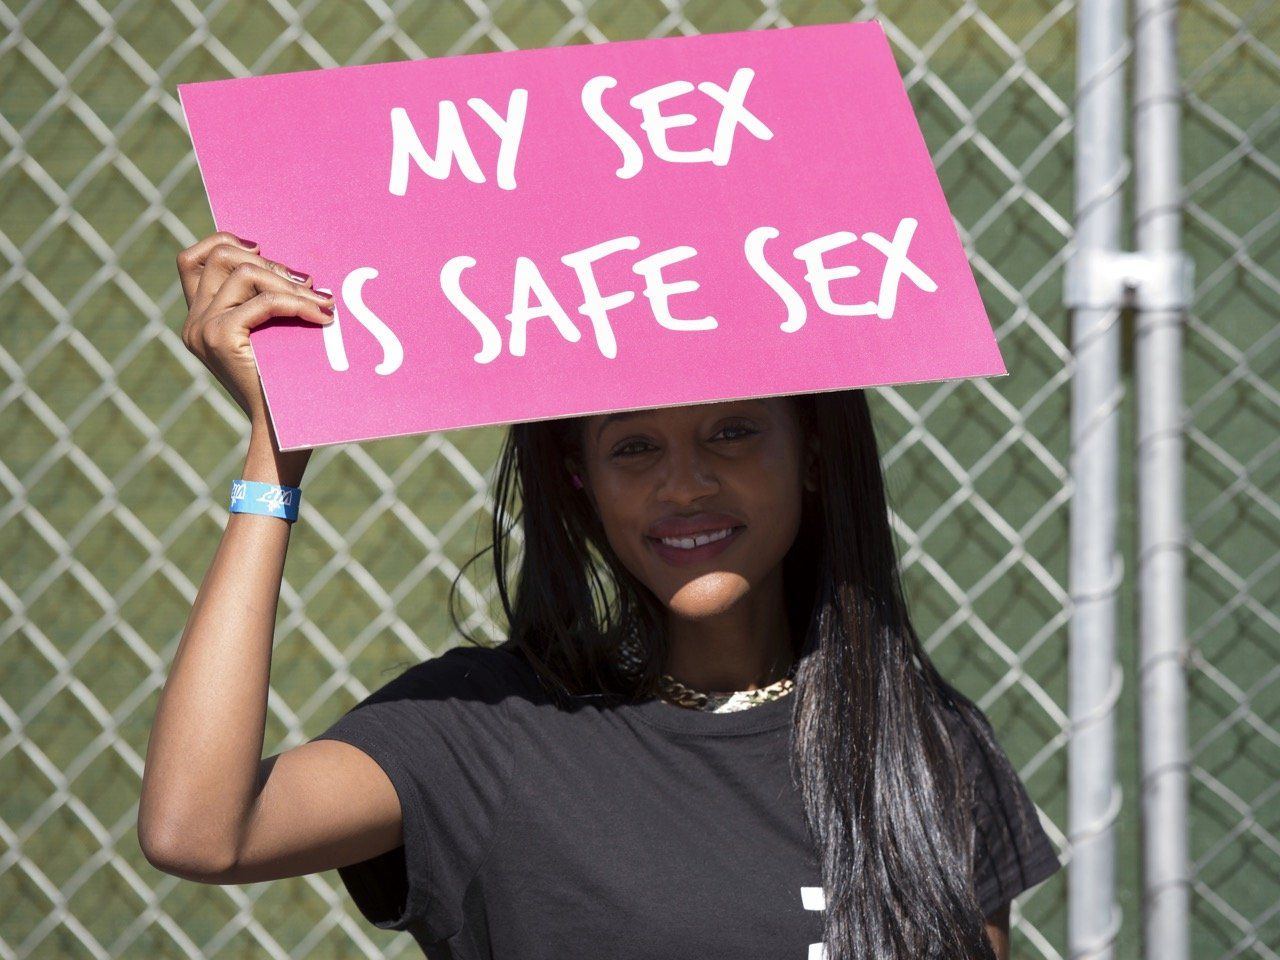 Background information sex education prevent teenage pregnancy